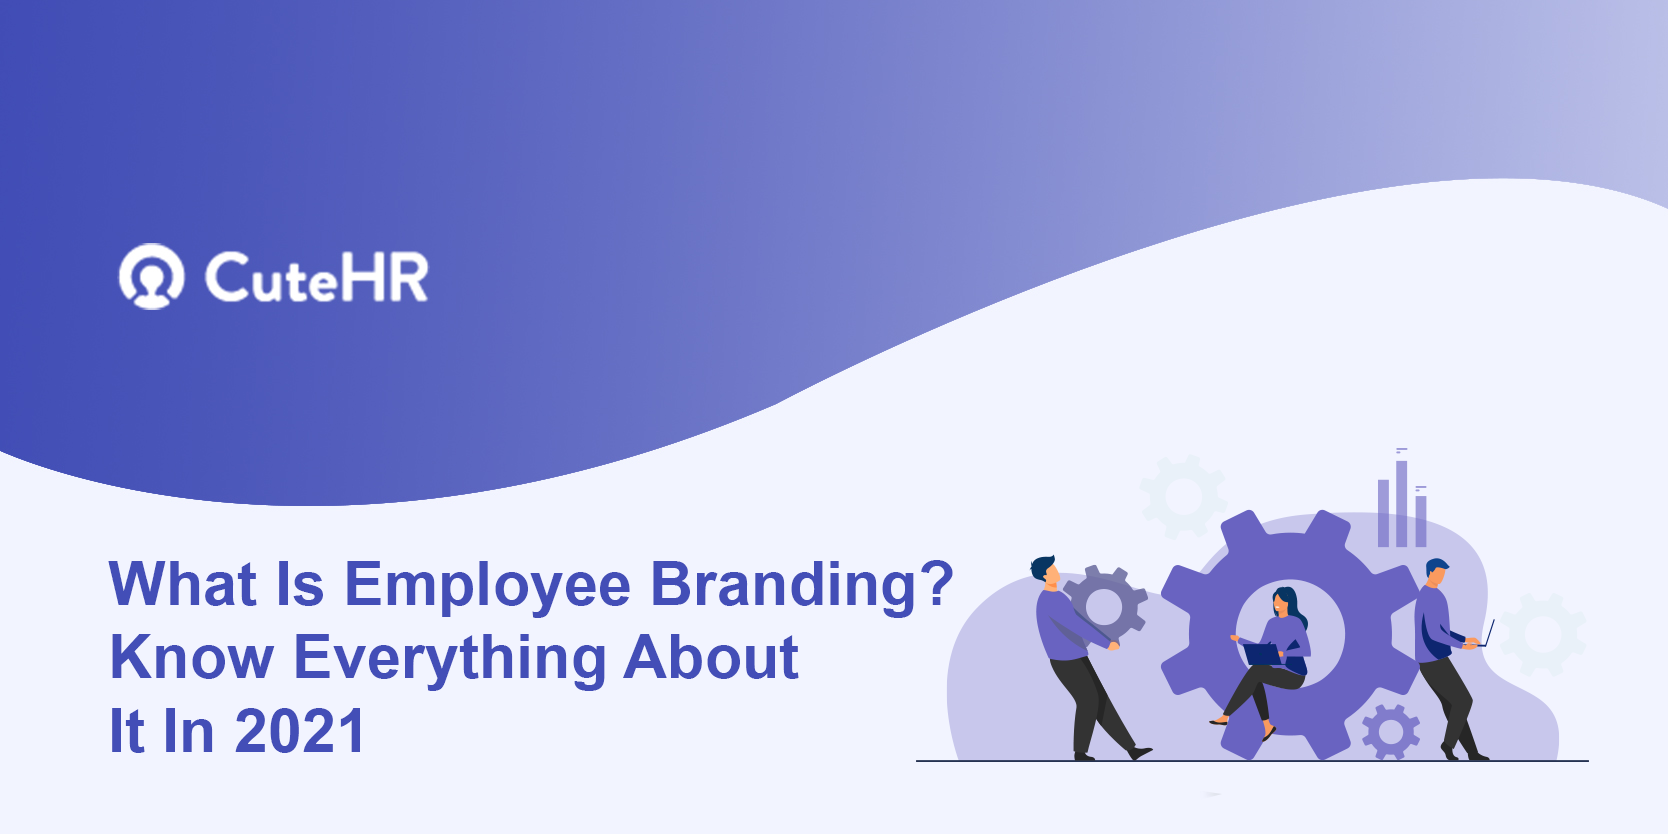 employee branding